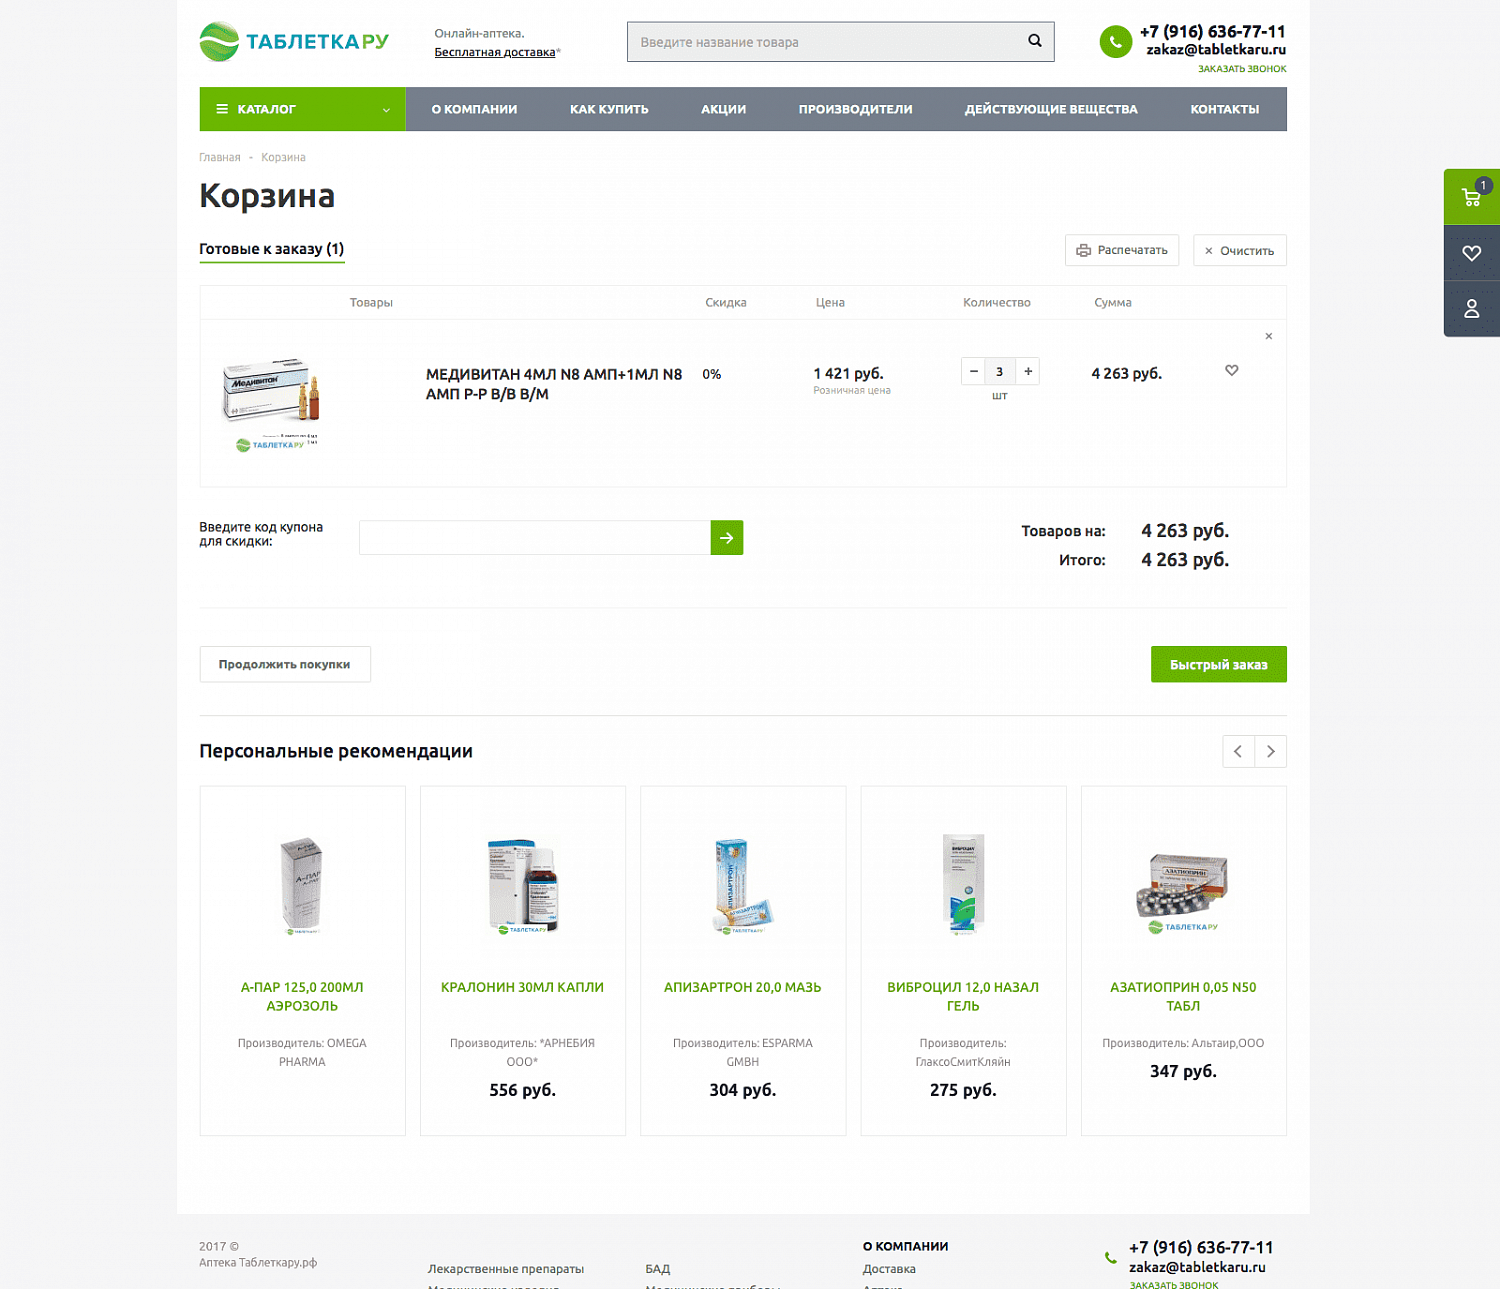 ТаблеткаРУ - онлайн аптека в Москве